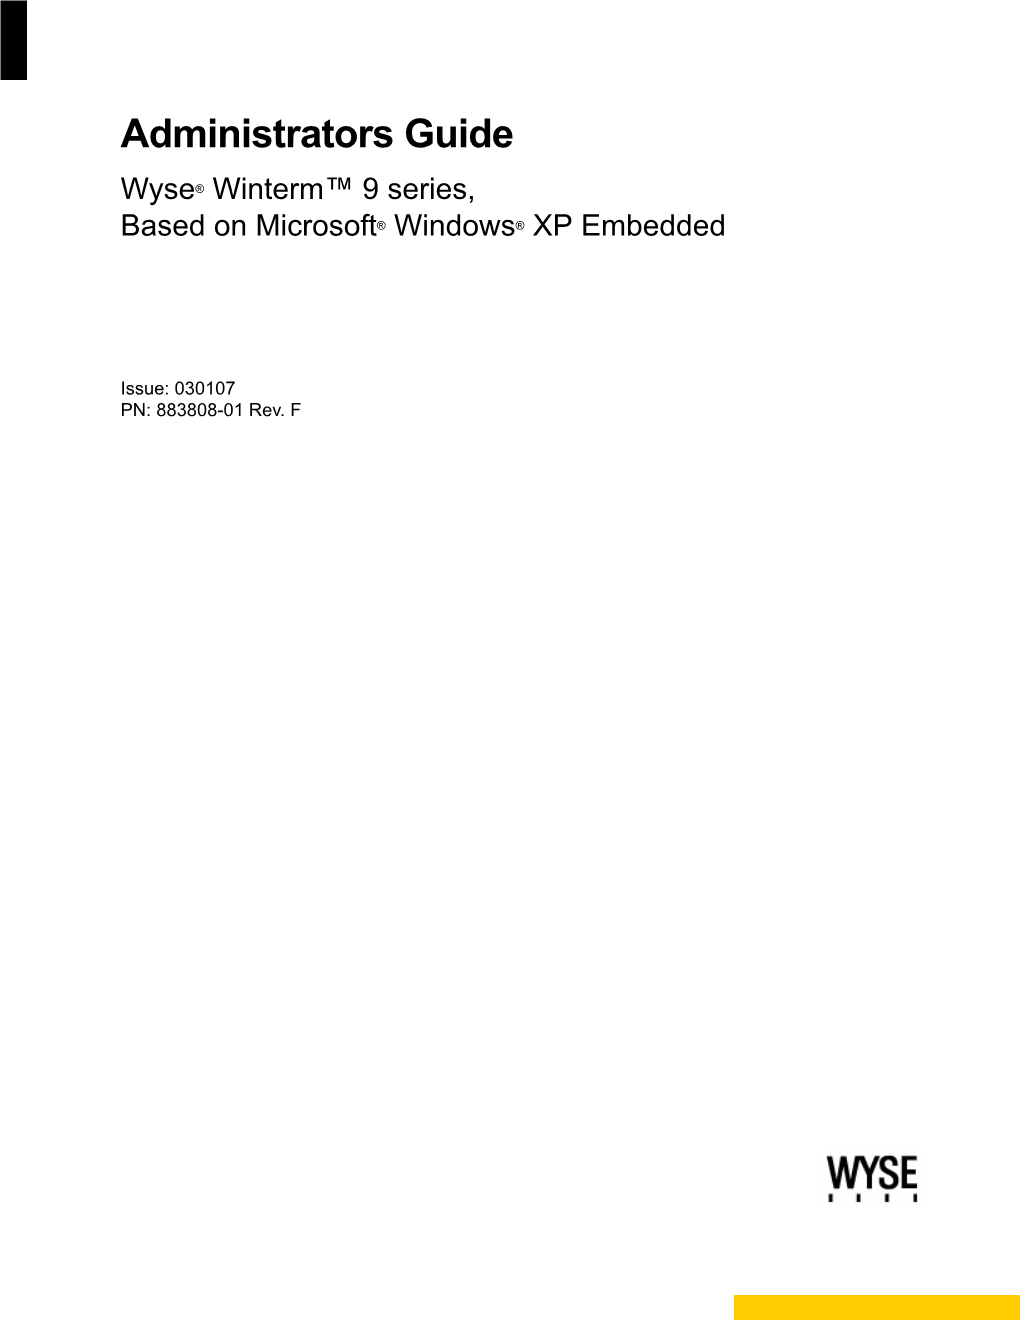 Wyse® Wintermtm 9 Series, Based on Microsoft® Windows® XP Embedded Issue: 030107